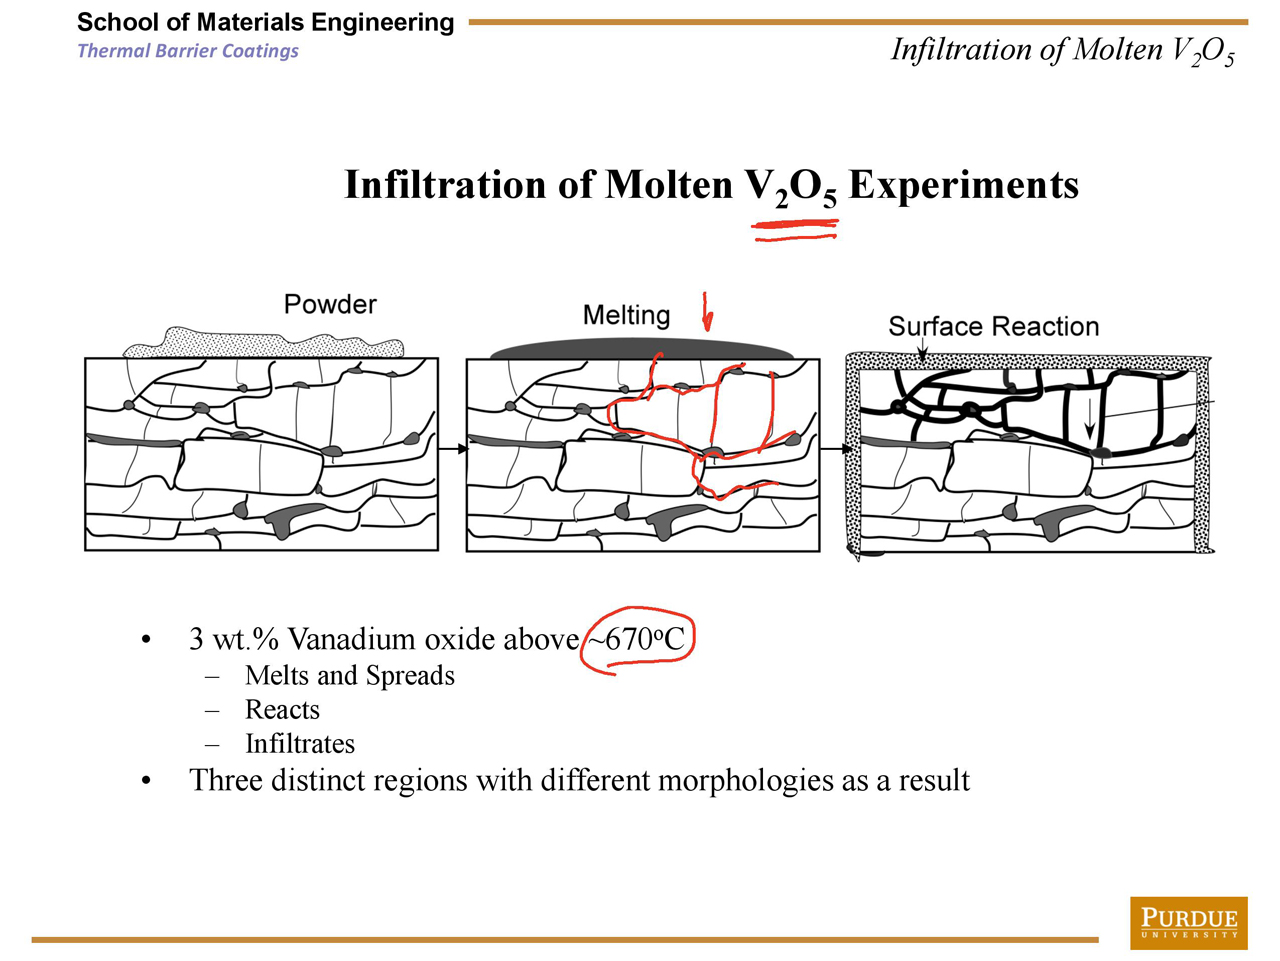 Infiltration of Molten V2O5 Experiments